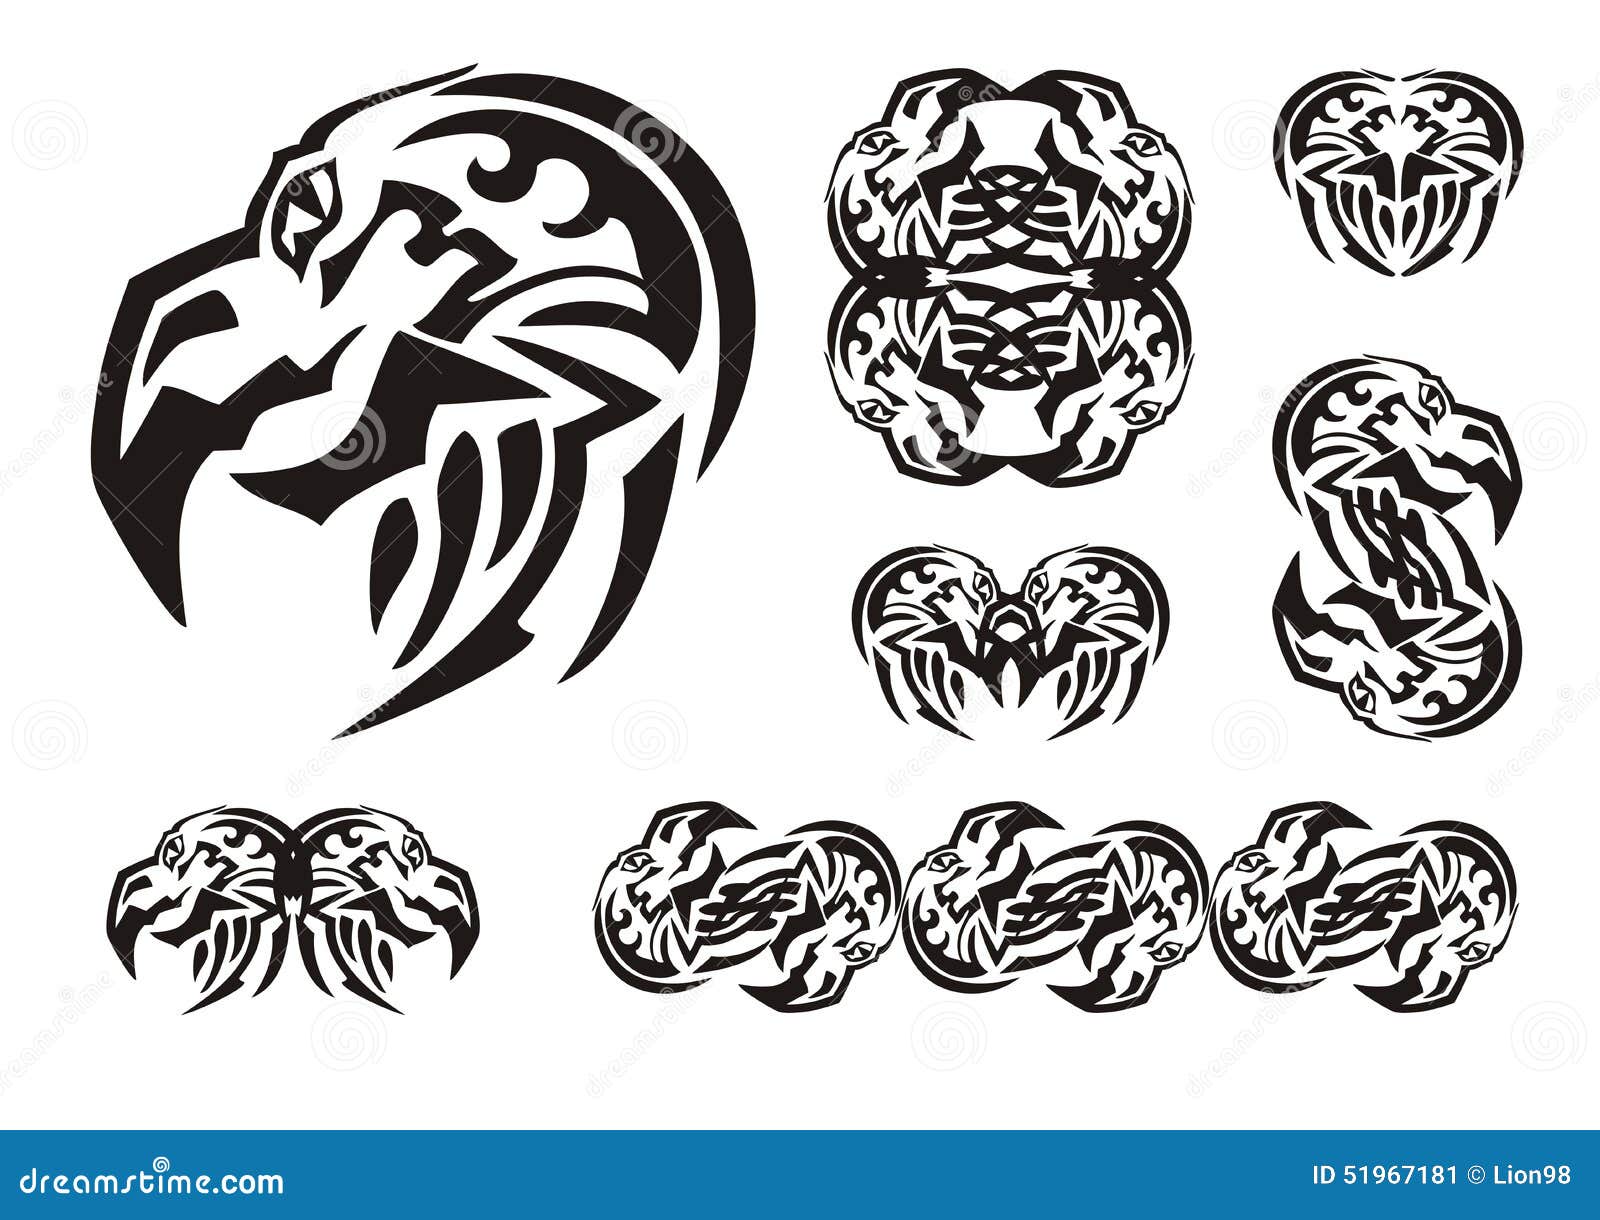 Bald eagle head symbols stock vector. Illustration of mascot - 51967181